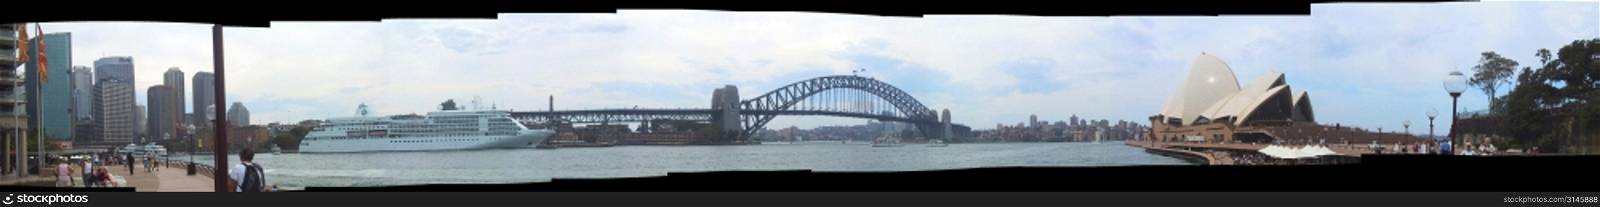 Sydney harbor bridge panoramic.